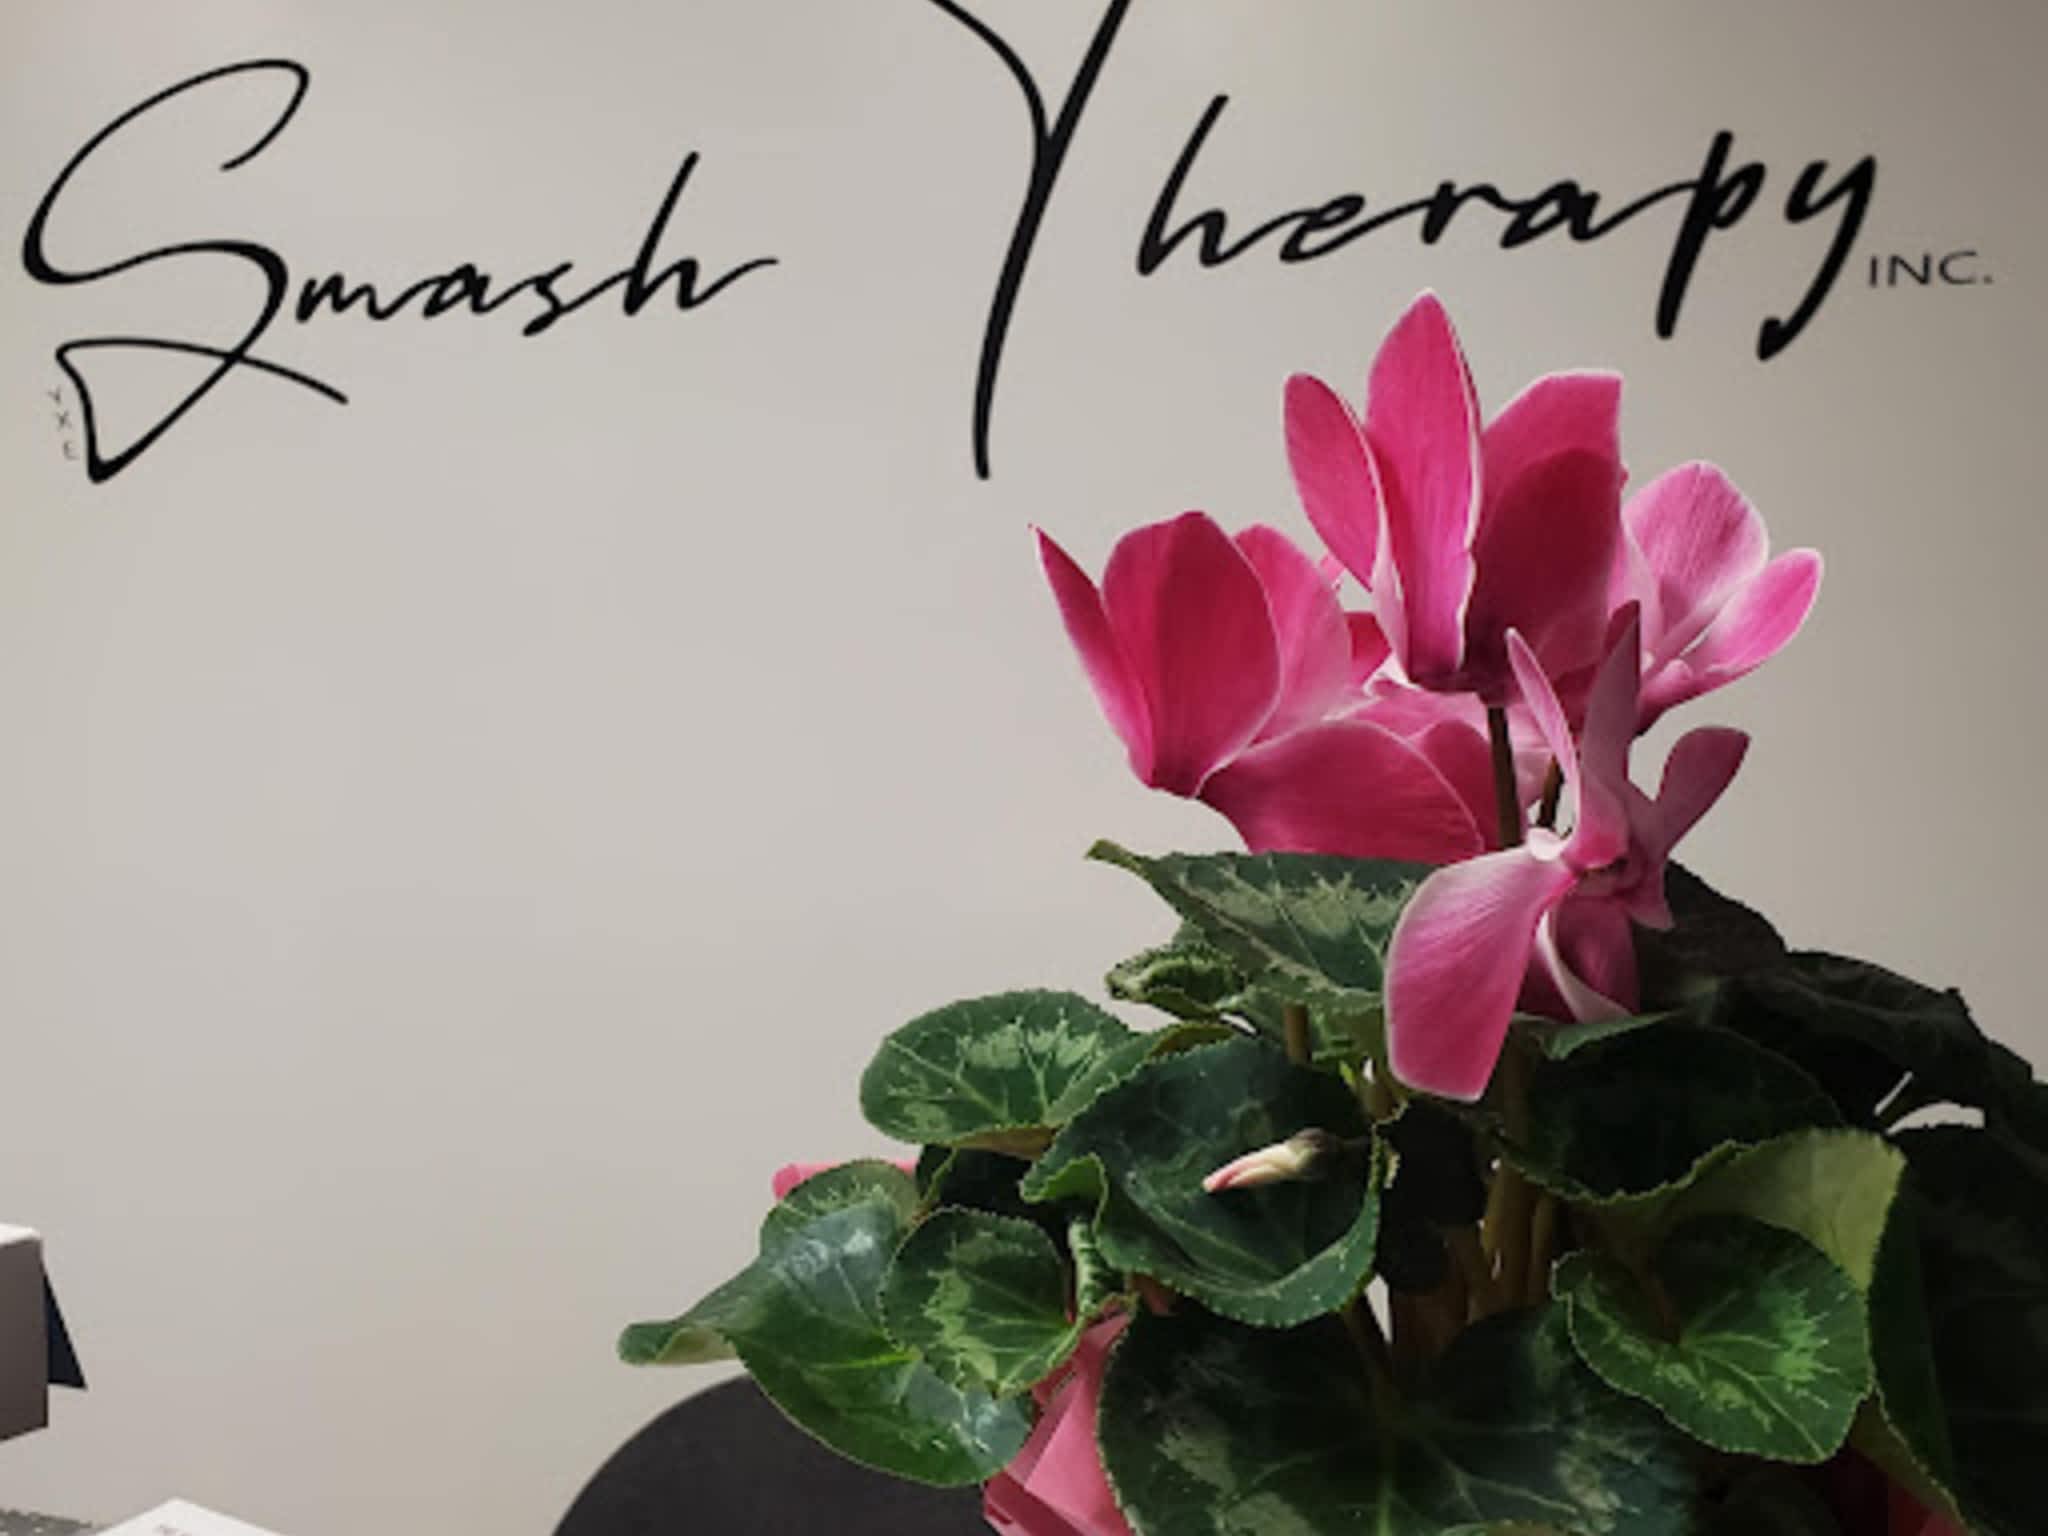 photo Yxe Smash Therapy Inc